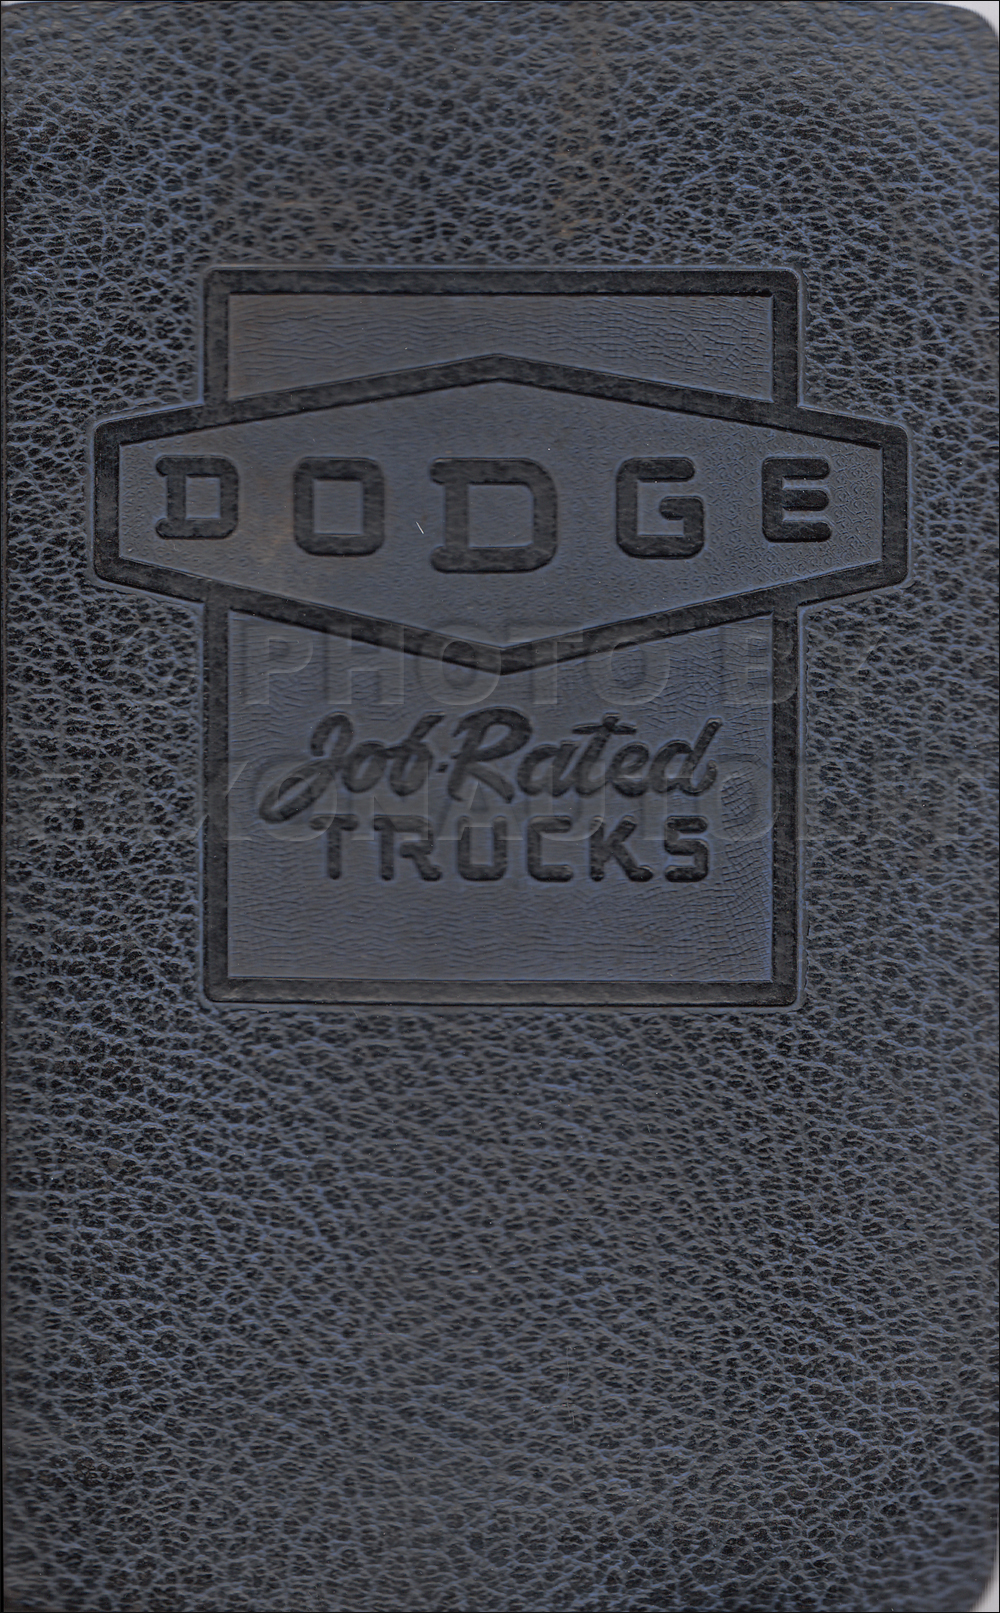 1947 Dodge Truck Data Book Original - printed August 47